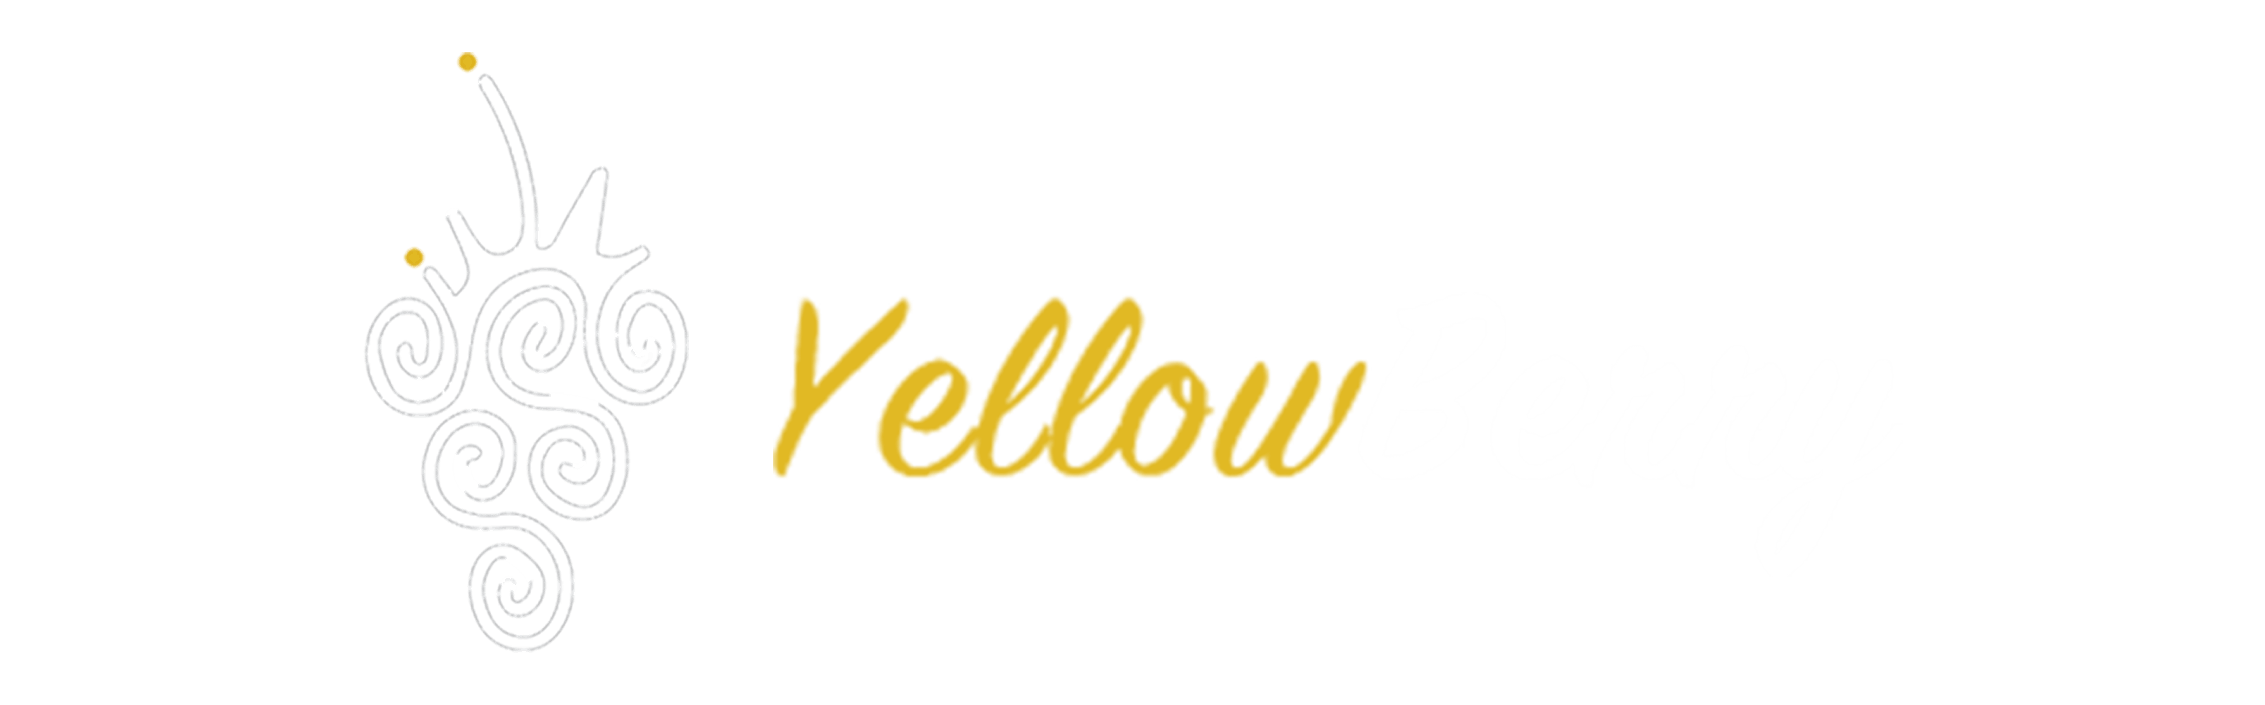 Yellow Berry Logo - YellowBerry